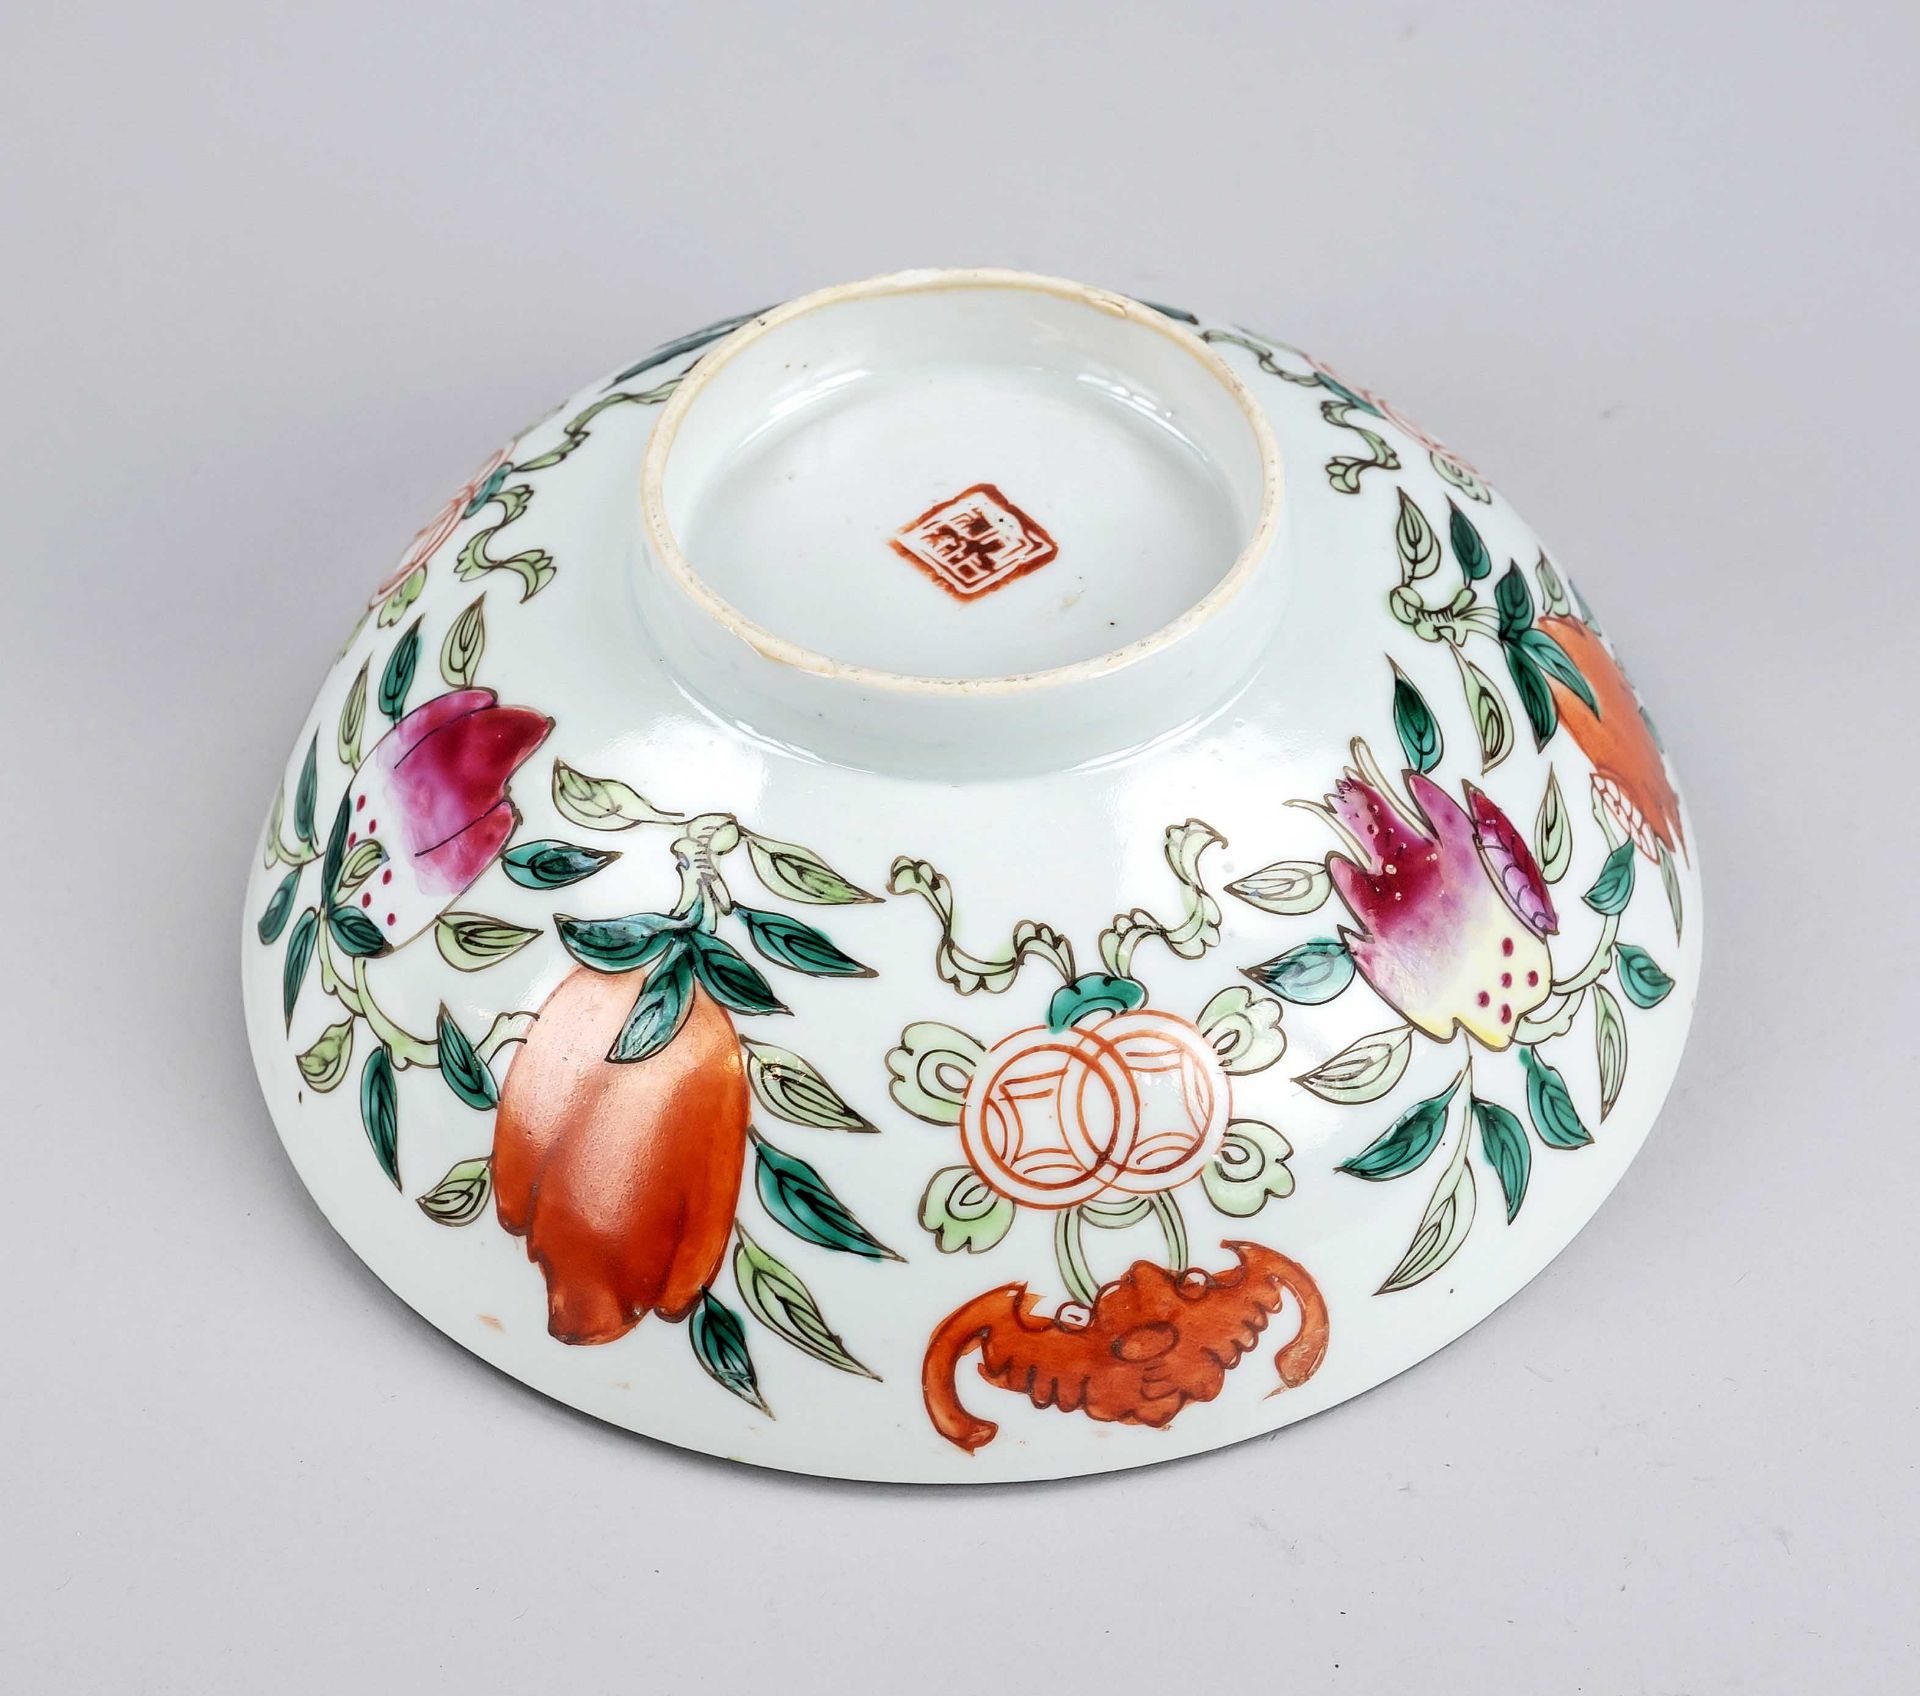 Large famille rose bowl, China, Qing, Tongzhi period(1861-1875), porcelain with polychrome enamel - Image 2 of 2